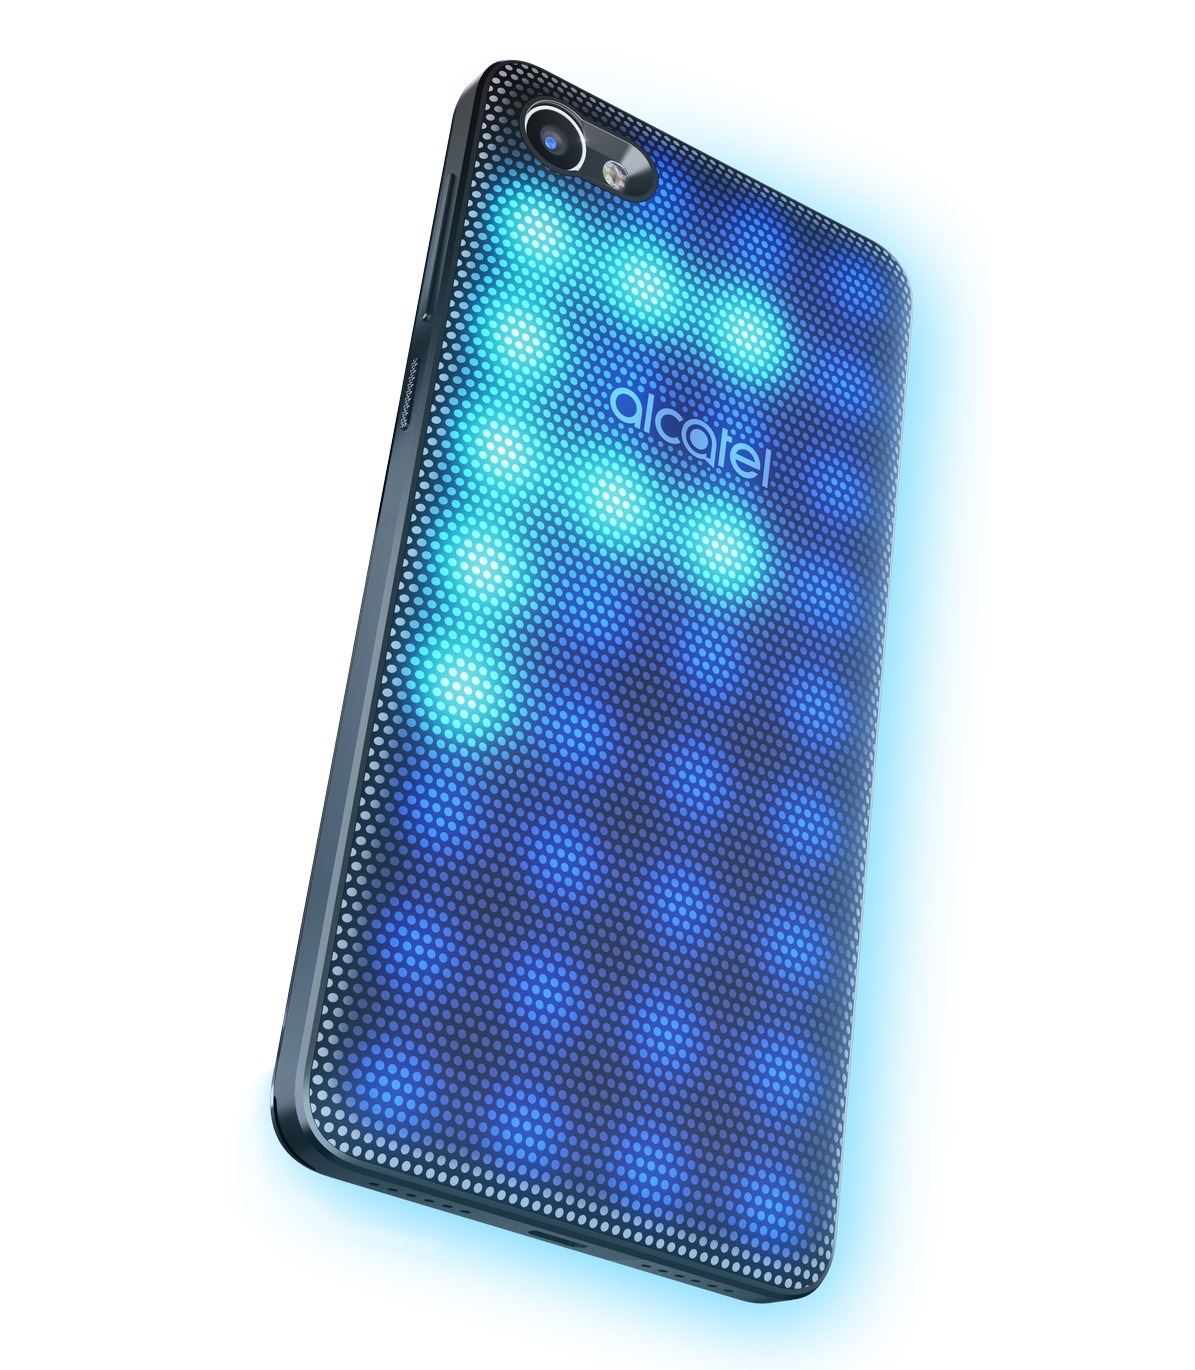 Alcatel A5 LED, un móvil para jóvenes con carcasa iluminada 5